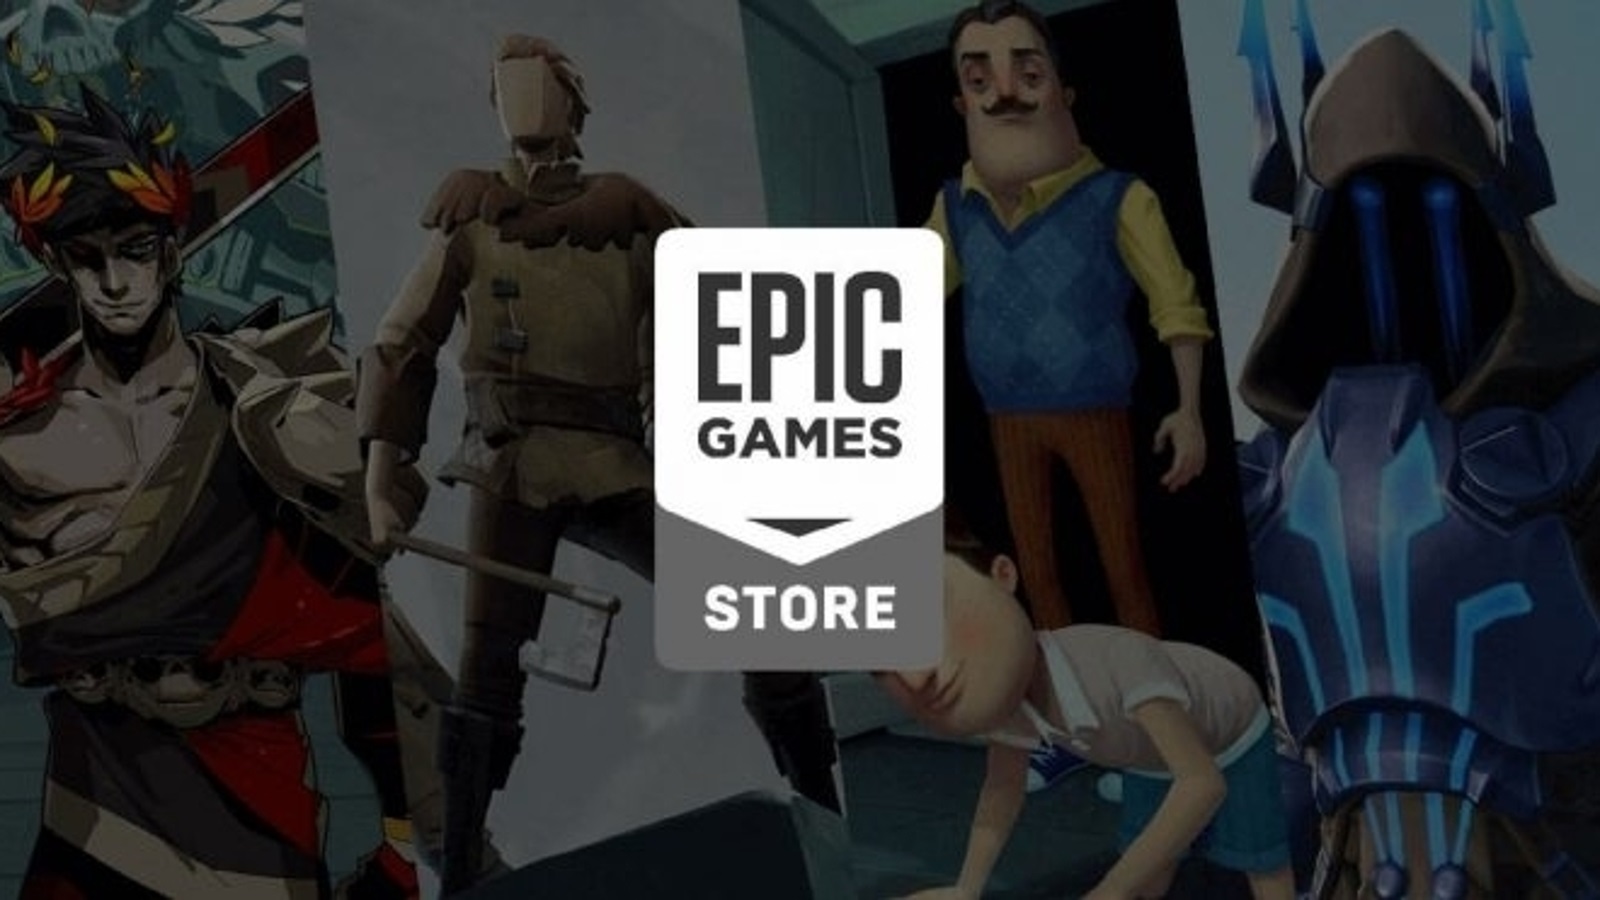 Epic Games, Epic Games Store, gratis, giochi, PC, Fallout